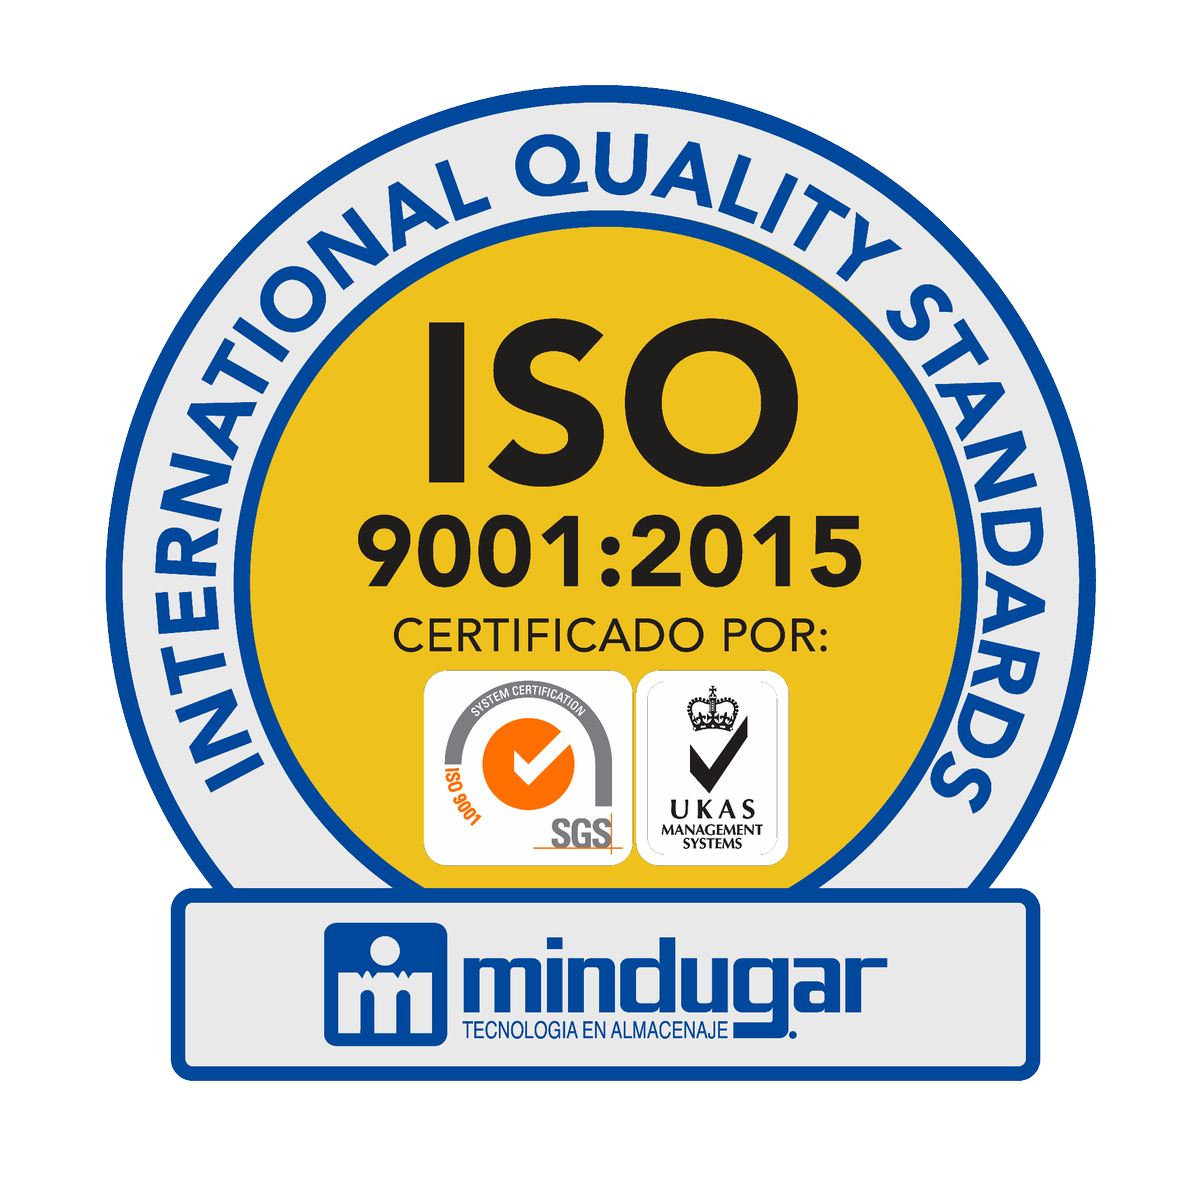 Actualización de nuestro Logo ISO siempre trabajando para ofrecerles lo mejor!!!
#mindugar #logoiso #certificados #excelencia #industria #almacenaje #automatizacion #tecnologia #racks #bodegas #CD #transportadores #clientes #socioscomerciales